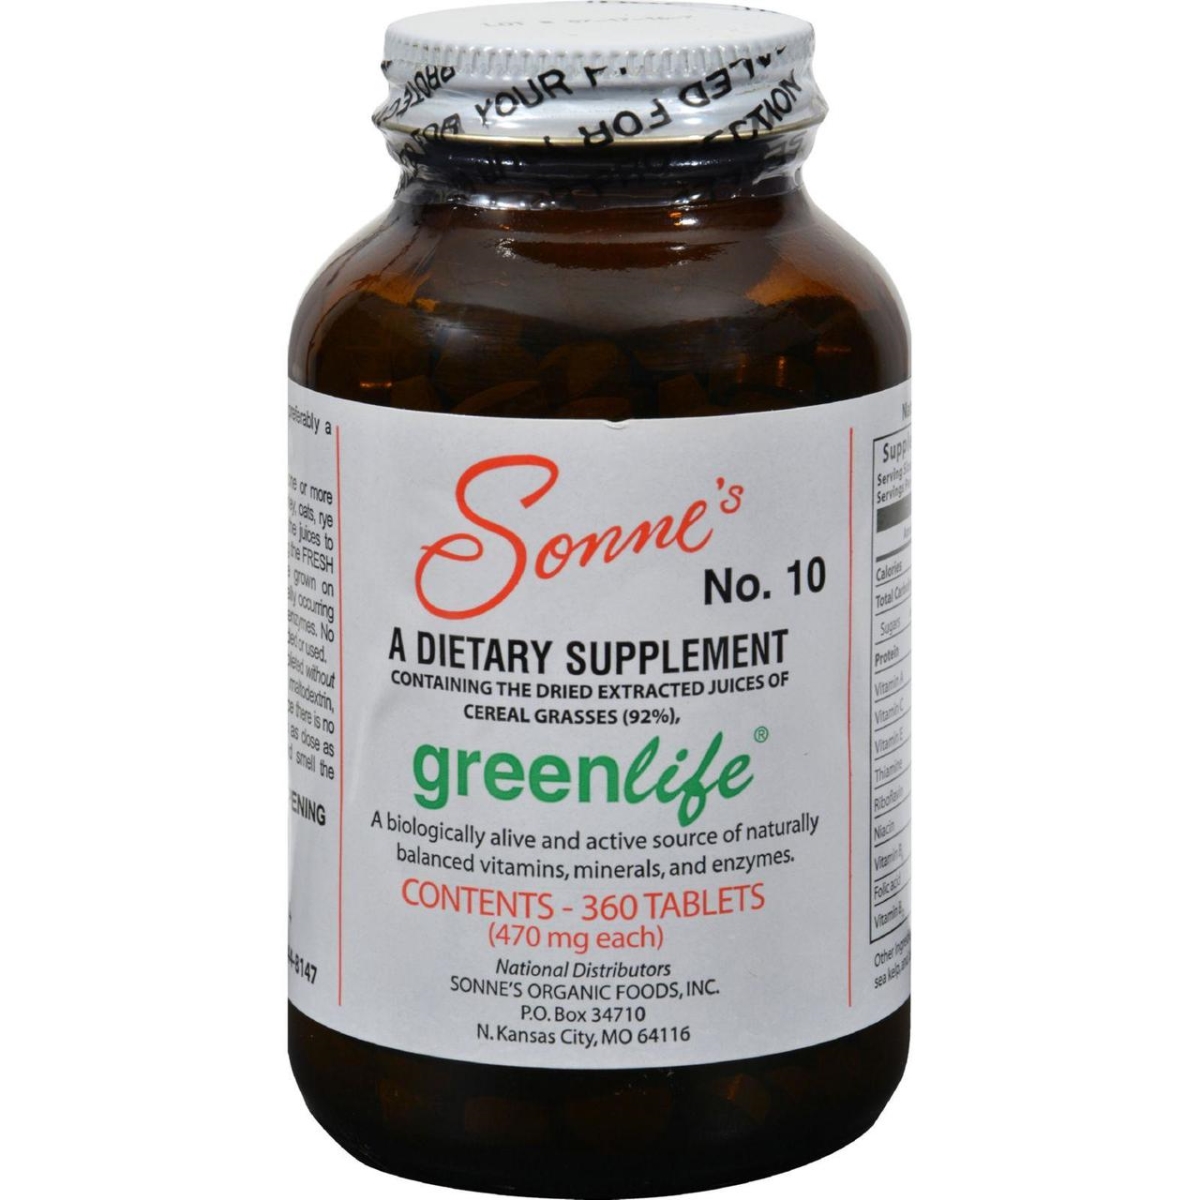 Hg0522797 No. 10 Greenlife - 360 Tablets